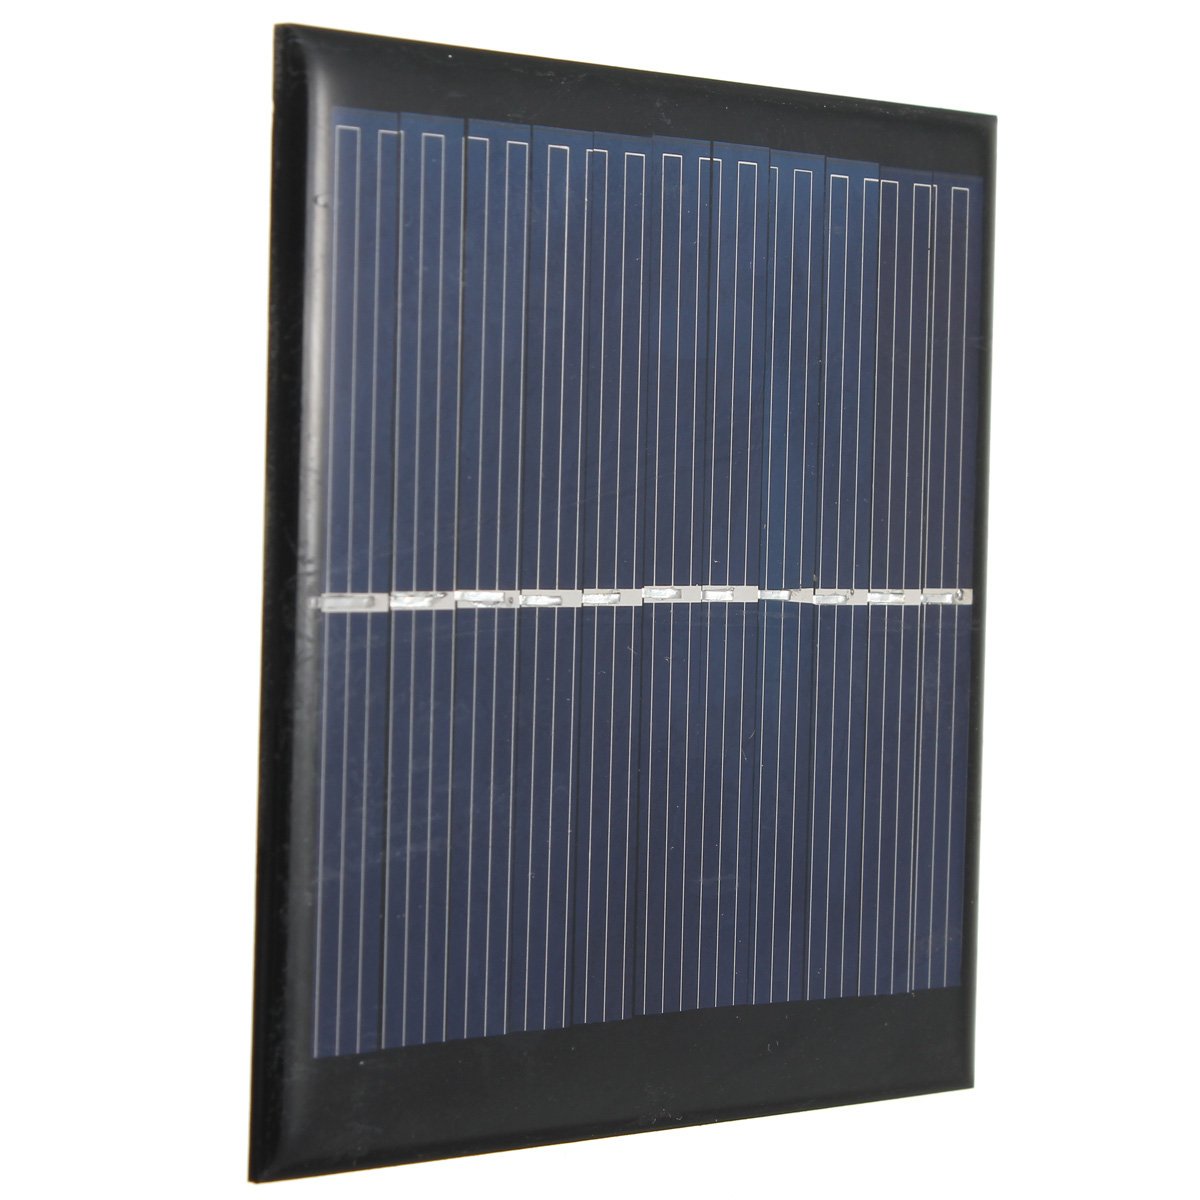 10pcs 5.5V 1W 180mA Polycrystalline 95mm x 95mm Mini Solar Panel Photovoltaic Panel 2